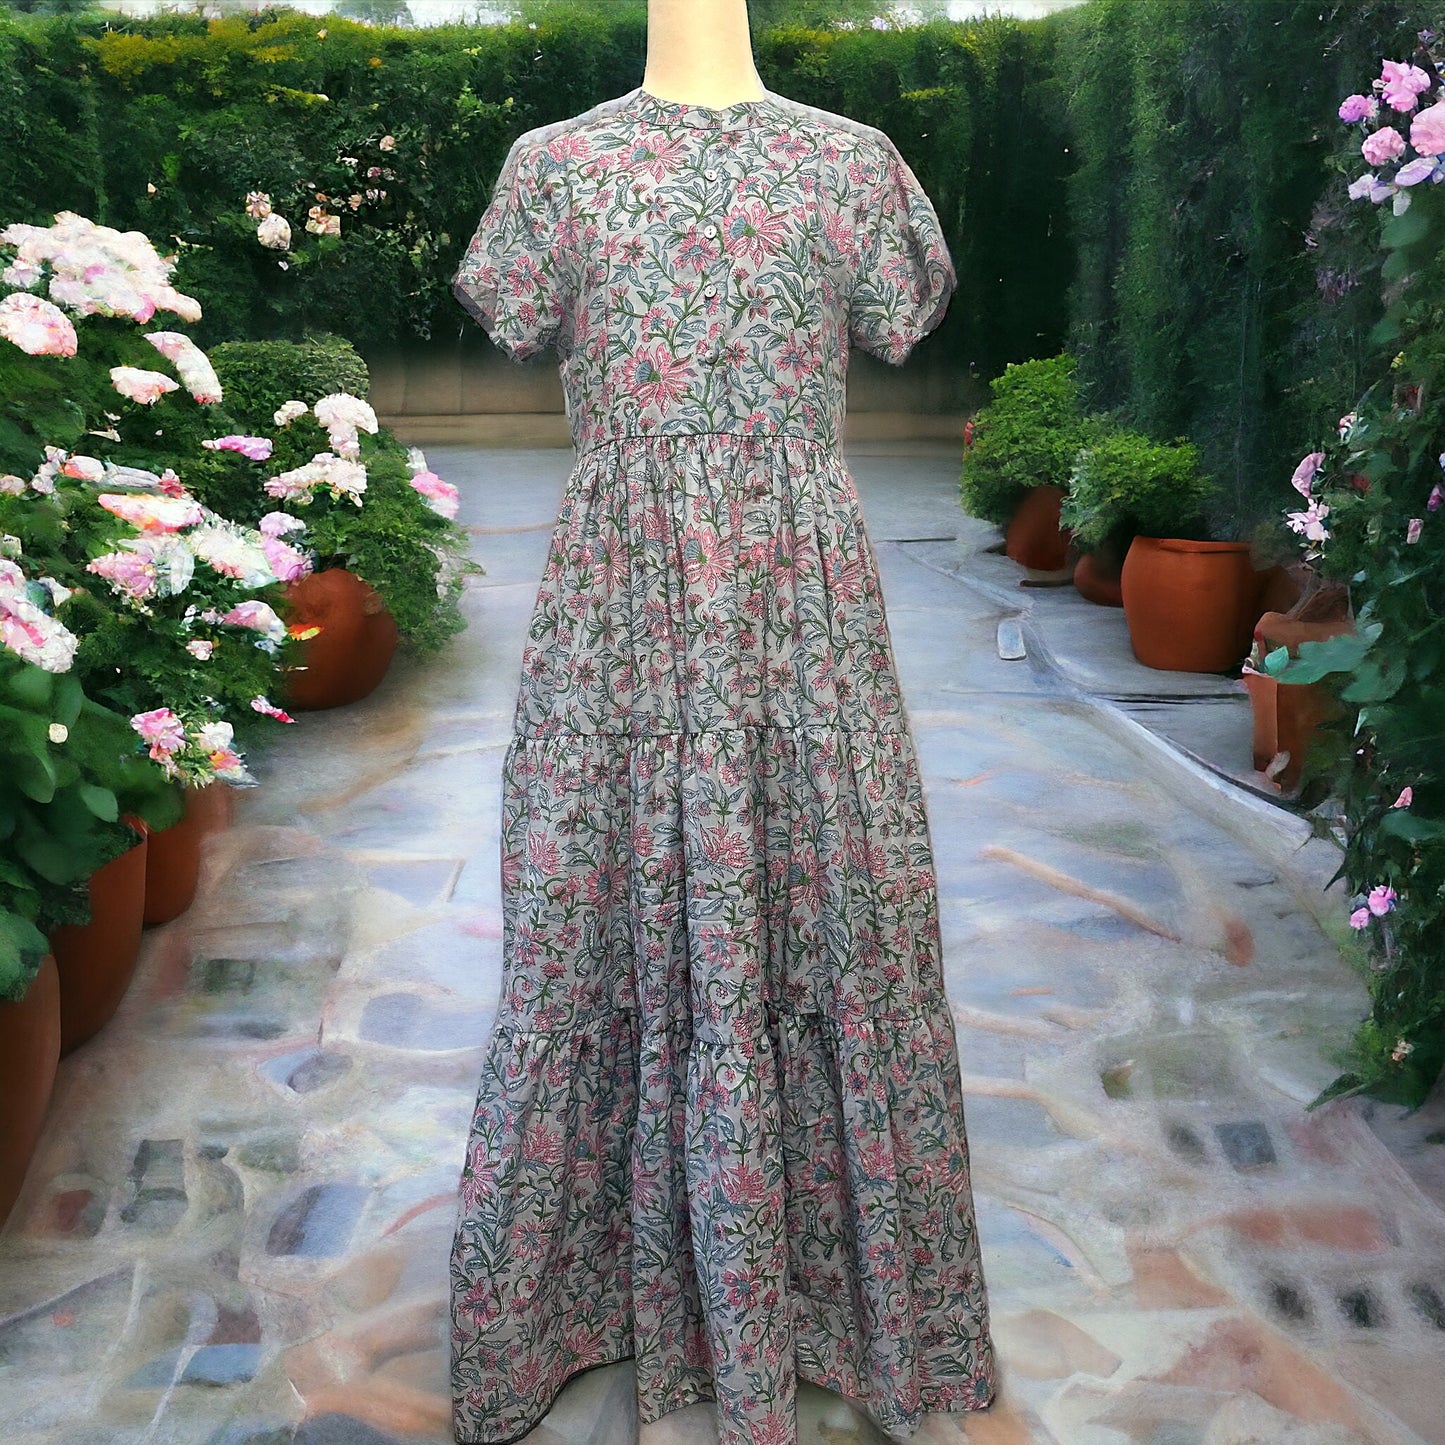 NEW!! Short Sleeve Dress - Ashy Floral Garden 半袖ワンピース